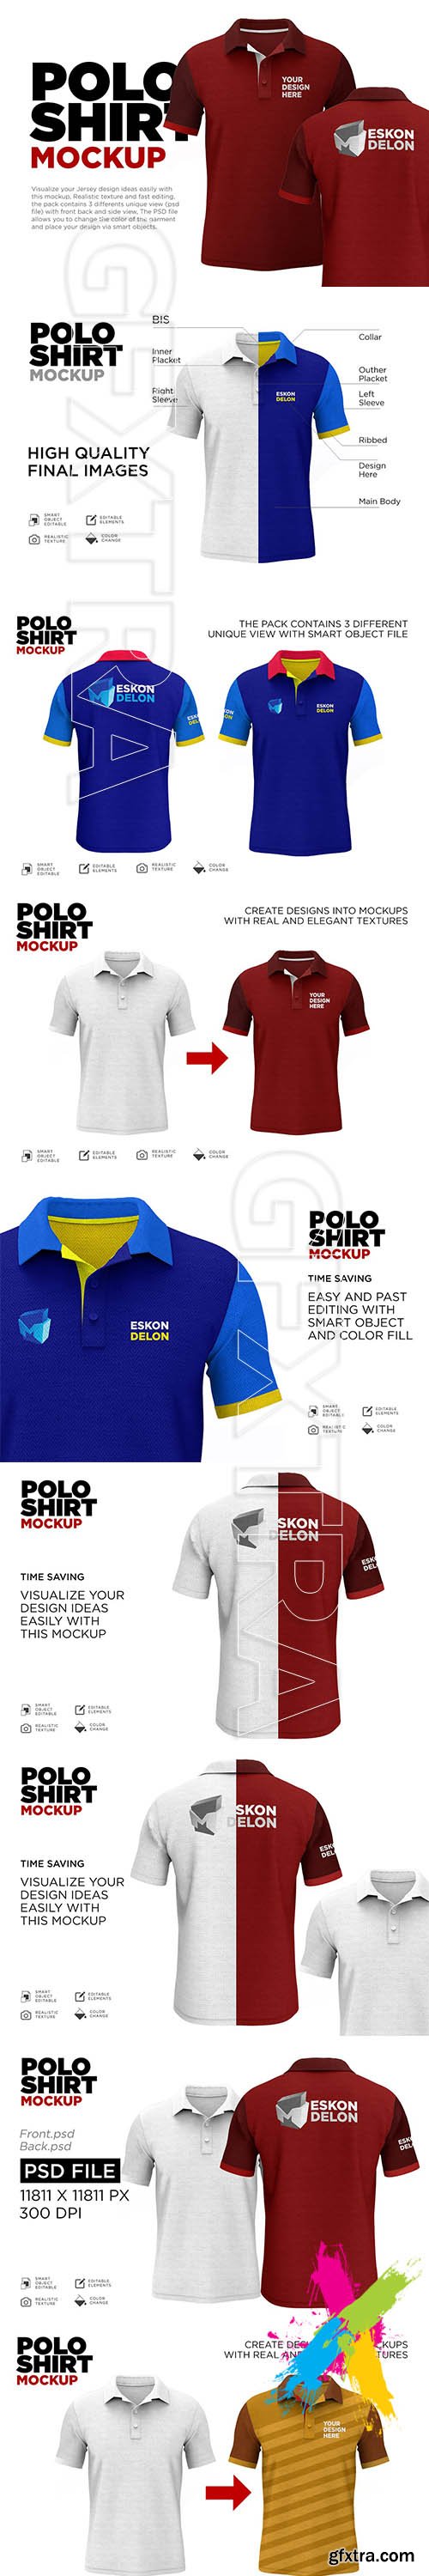 CreativeMarket - Polo Shirt Mockup Psd 5894833